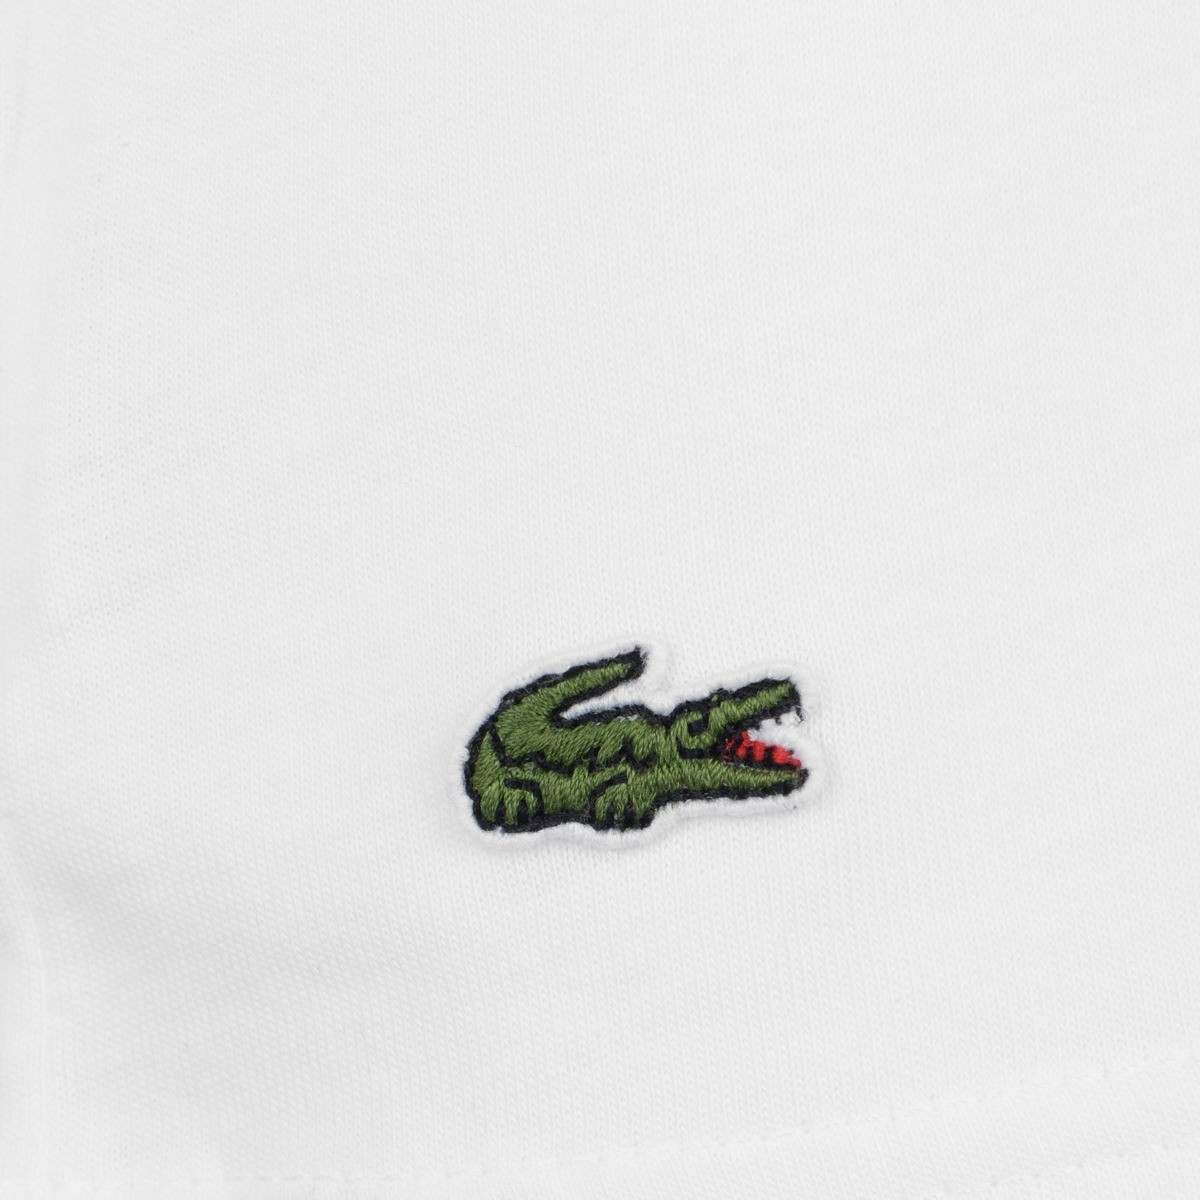 White Alligator Logo - Lacoste Boys White Crocodile Logo Top